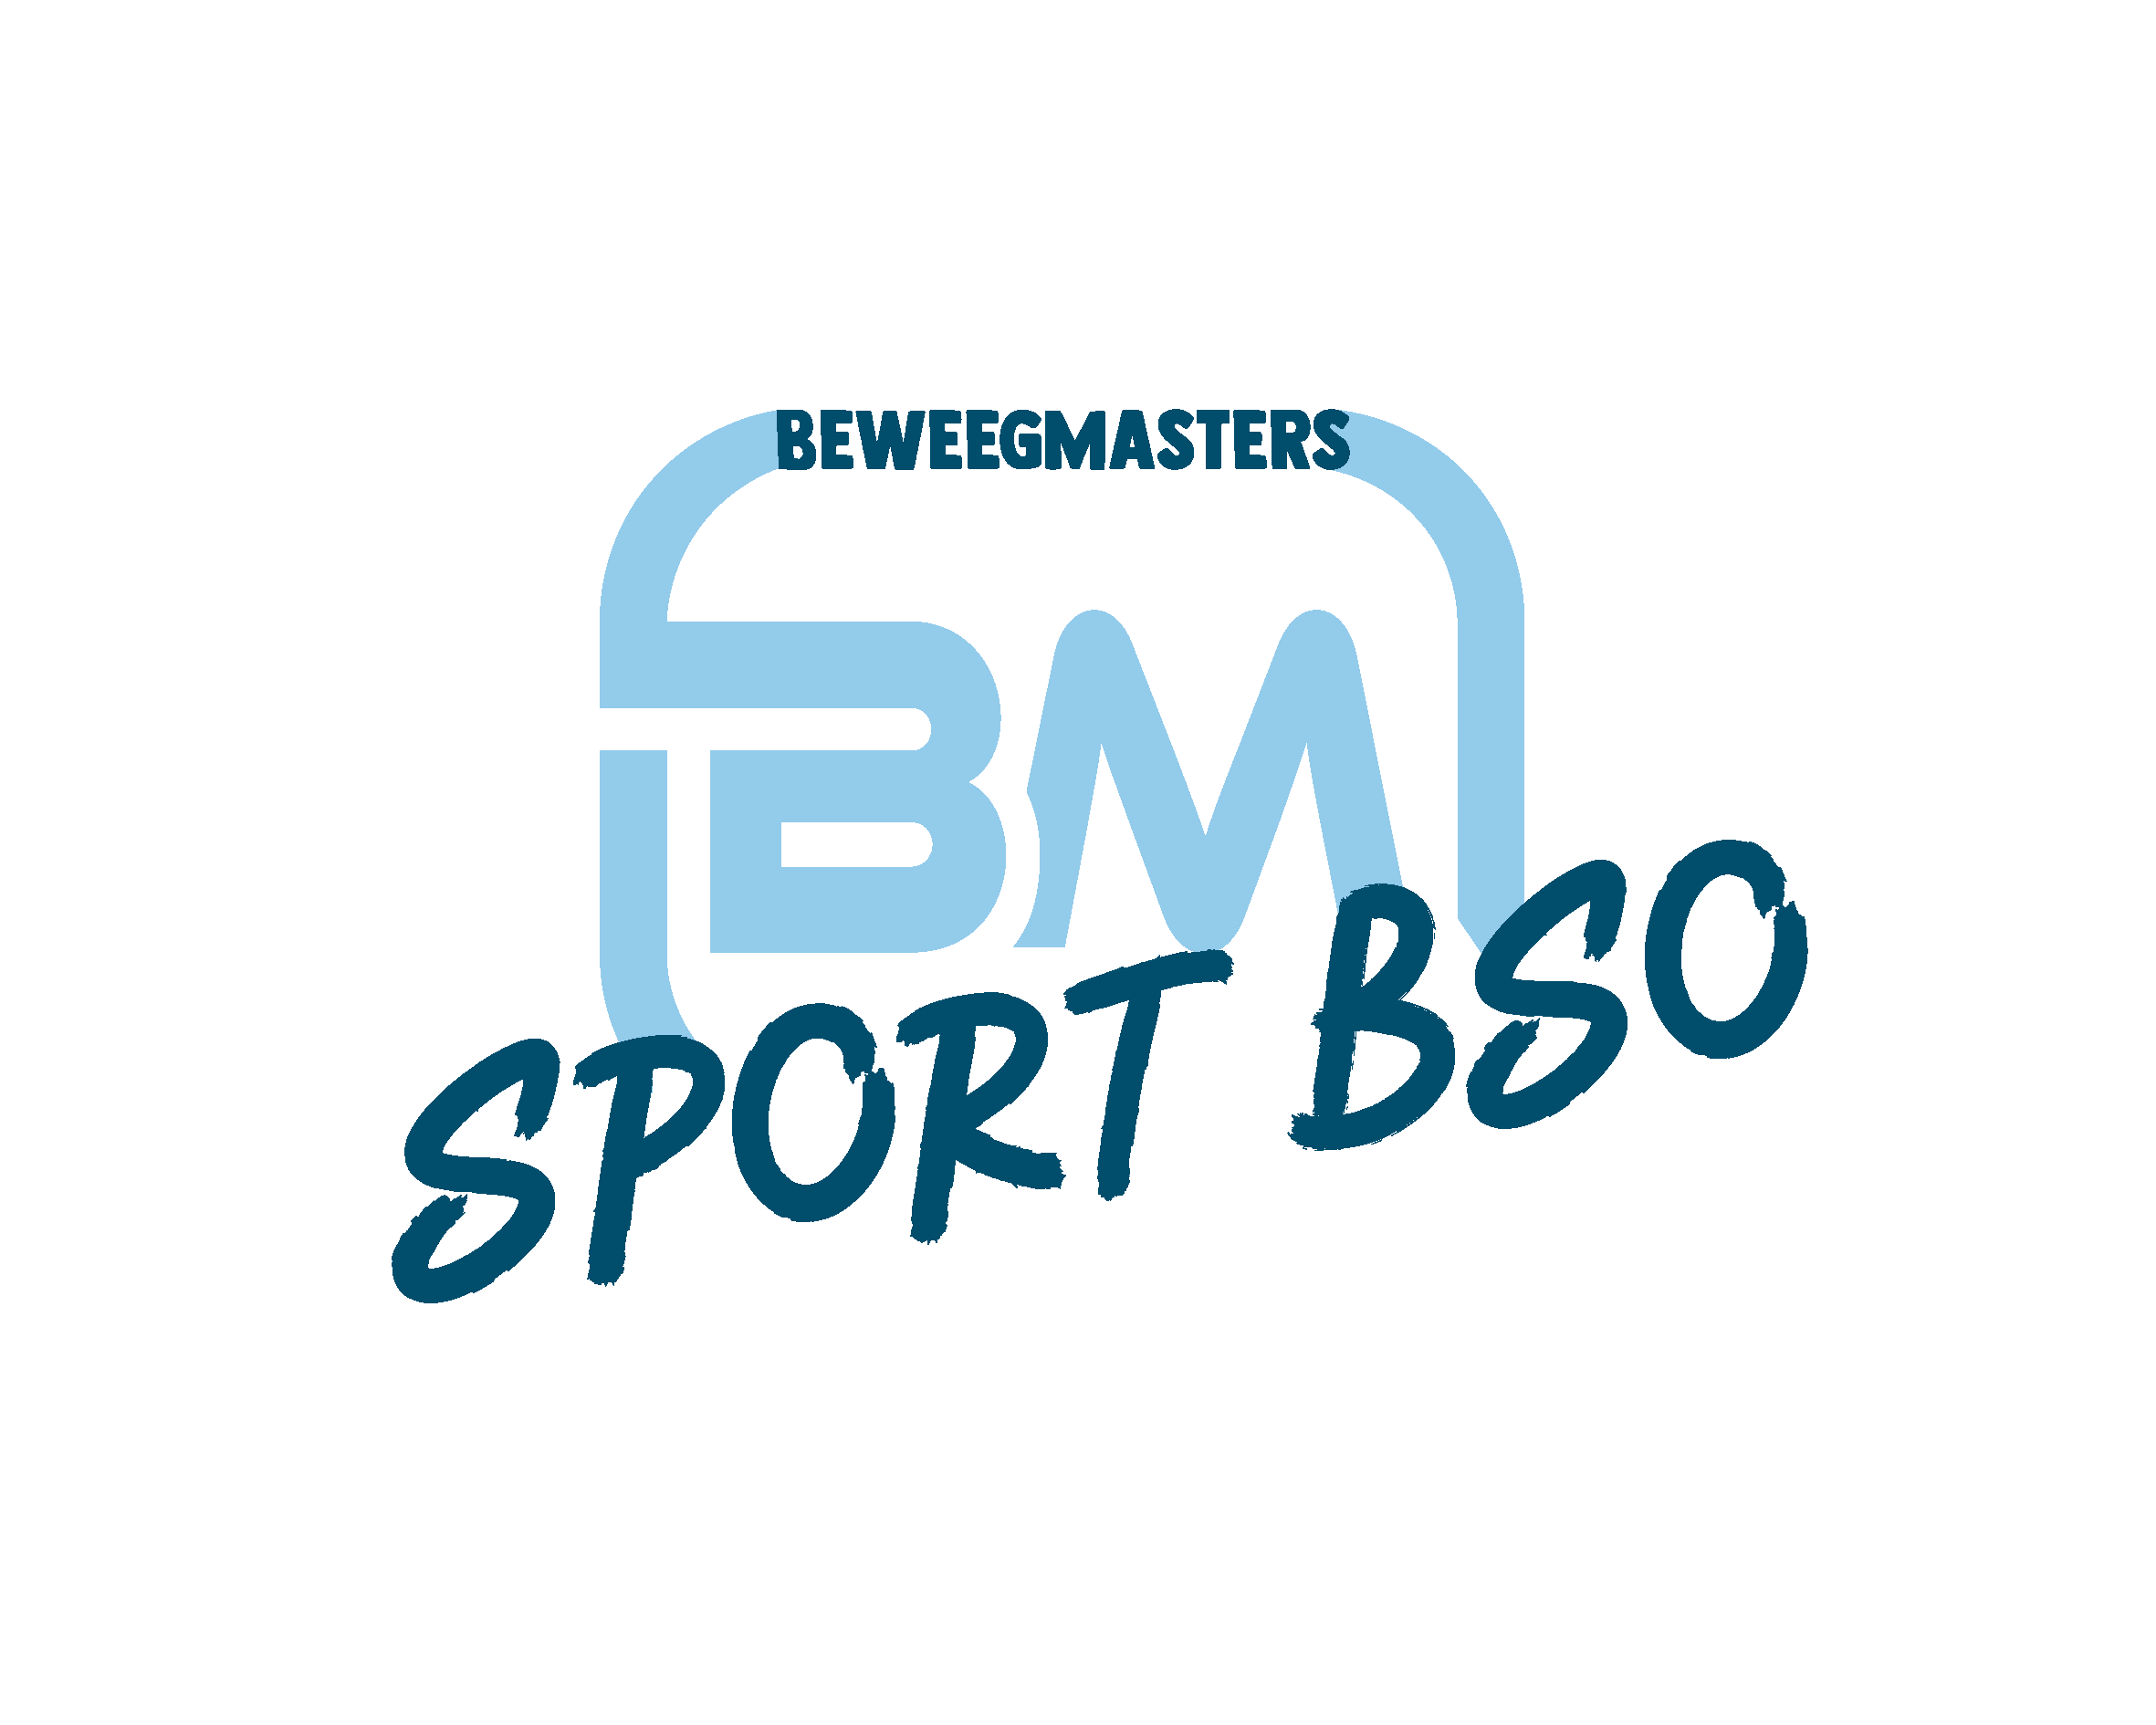 Beweegmasters Sport BSO